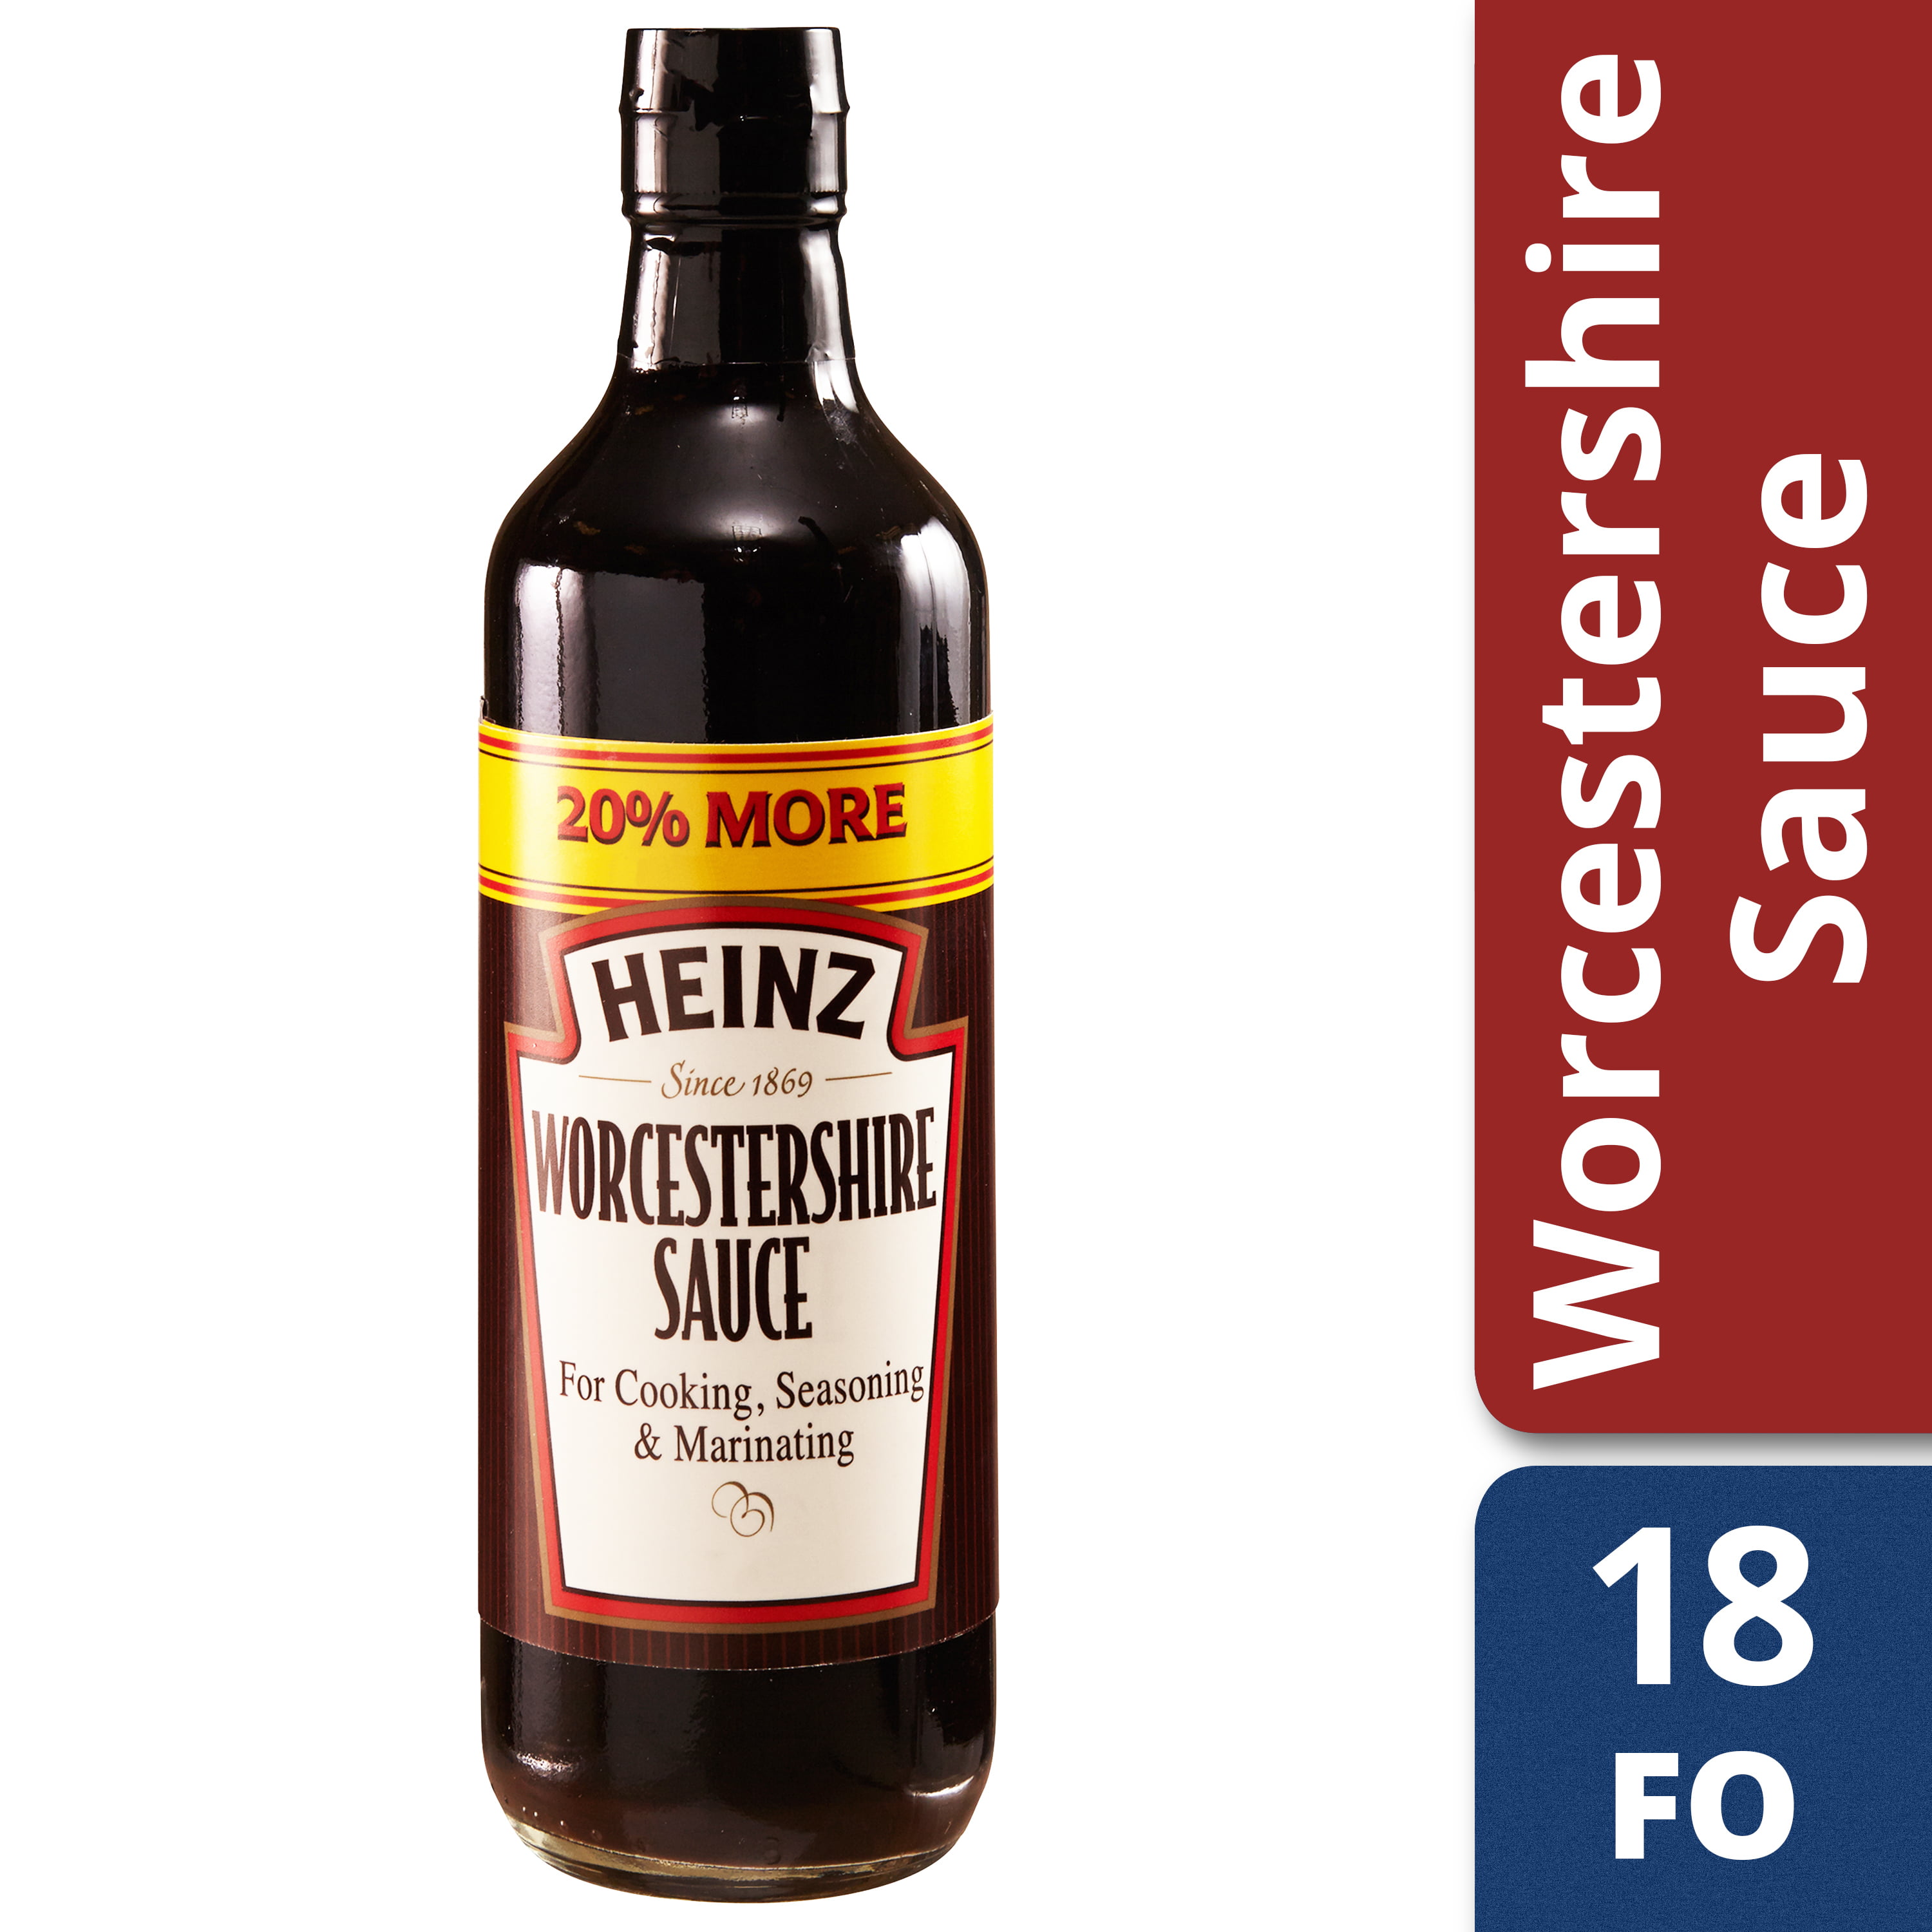 Heinz Worcestershire Sauce 18 Fl Oz Bottle Walmart Com Walmart Com,Chess Strategy Quotes